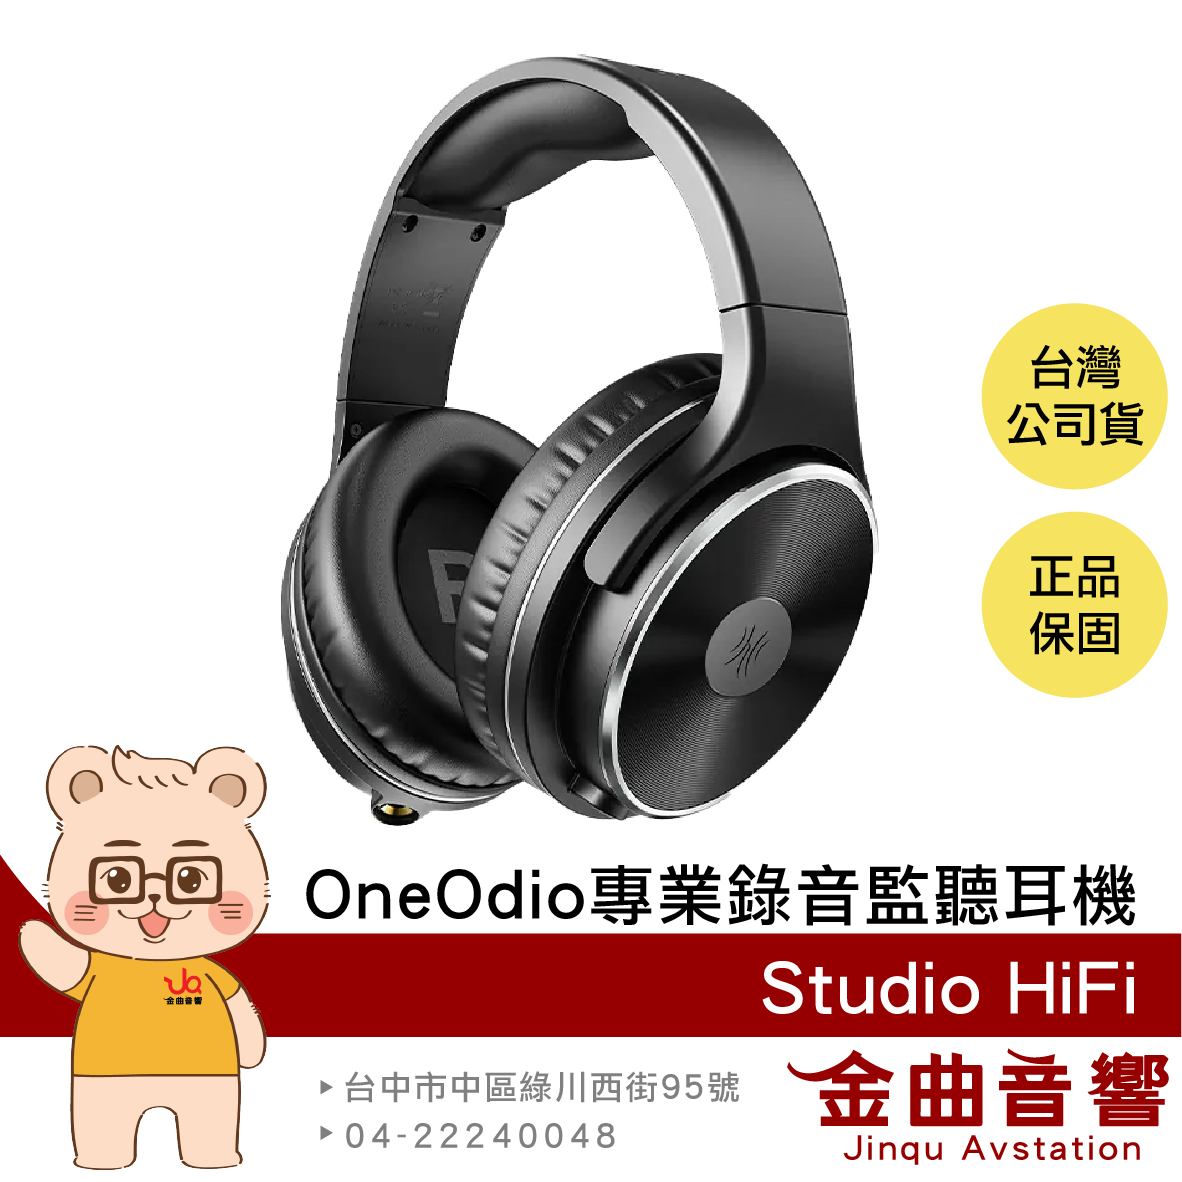 OneOdio Studio Hifi 專業 錄音 HI-Res 監聽耳機 | 金曲音響